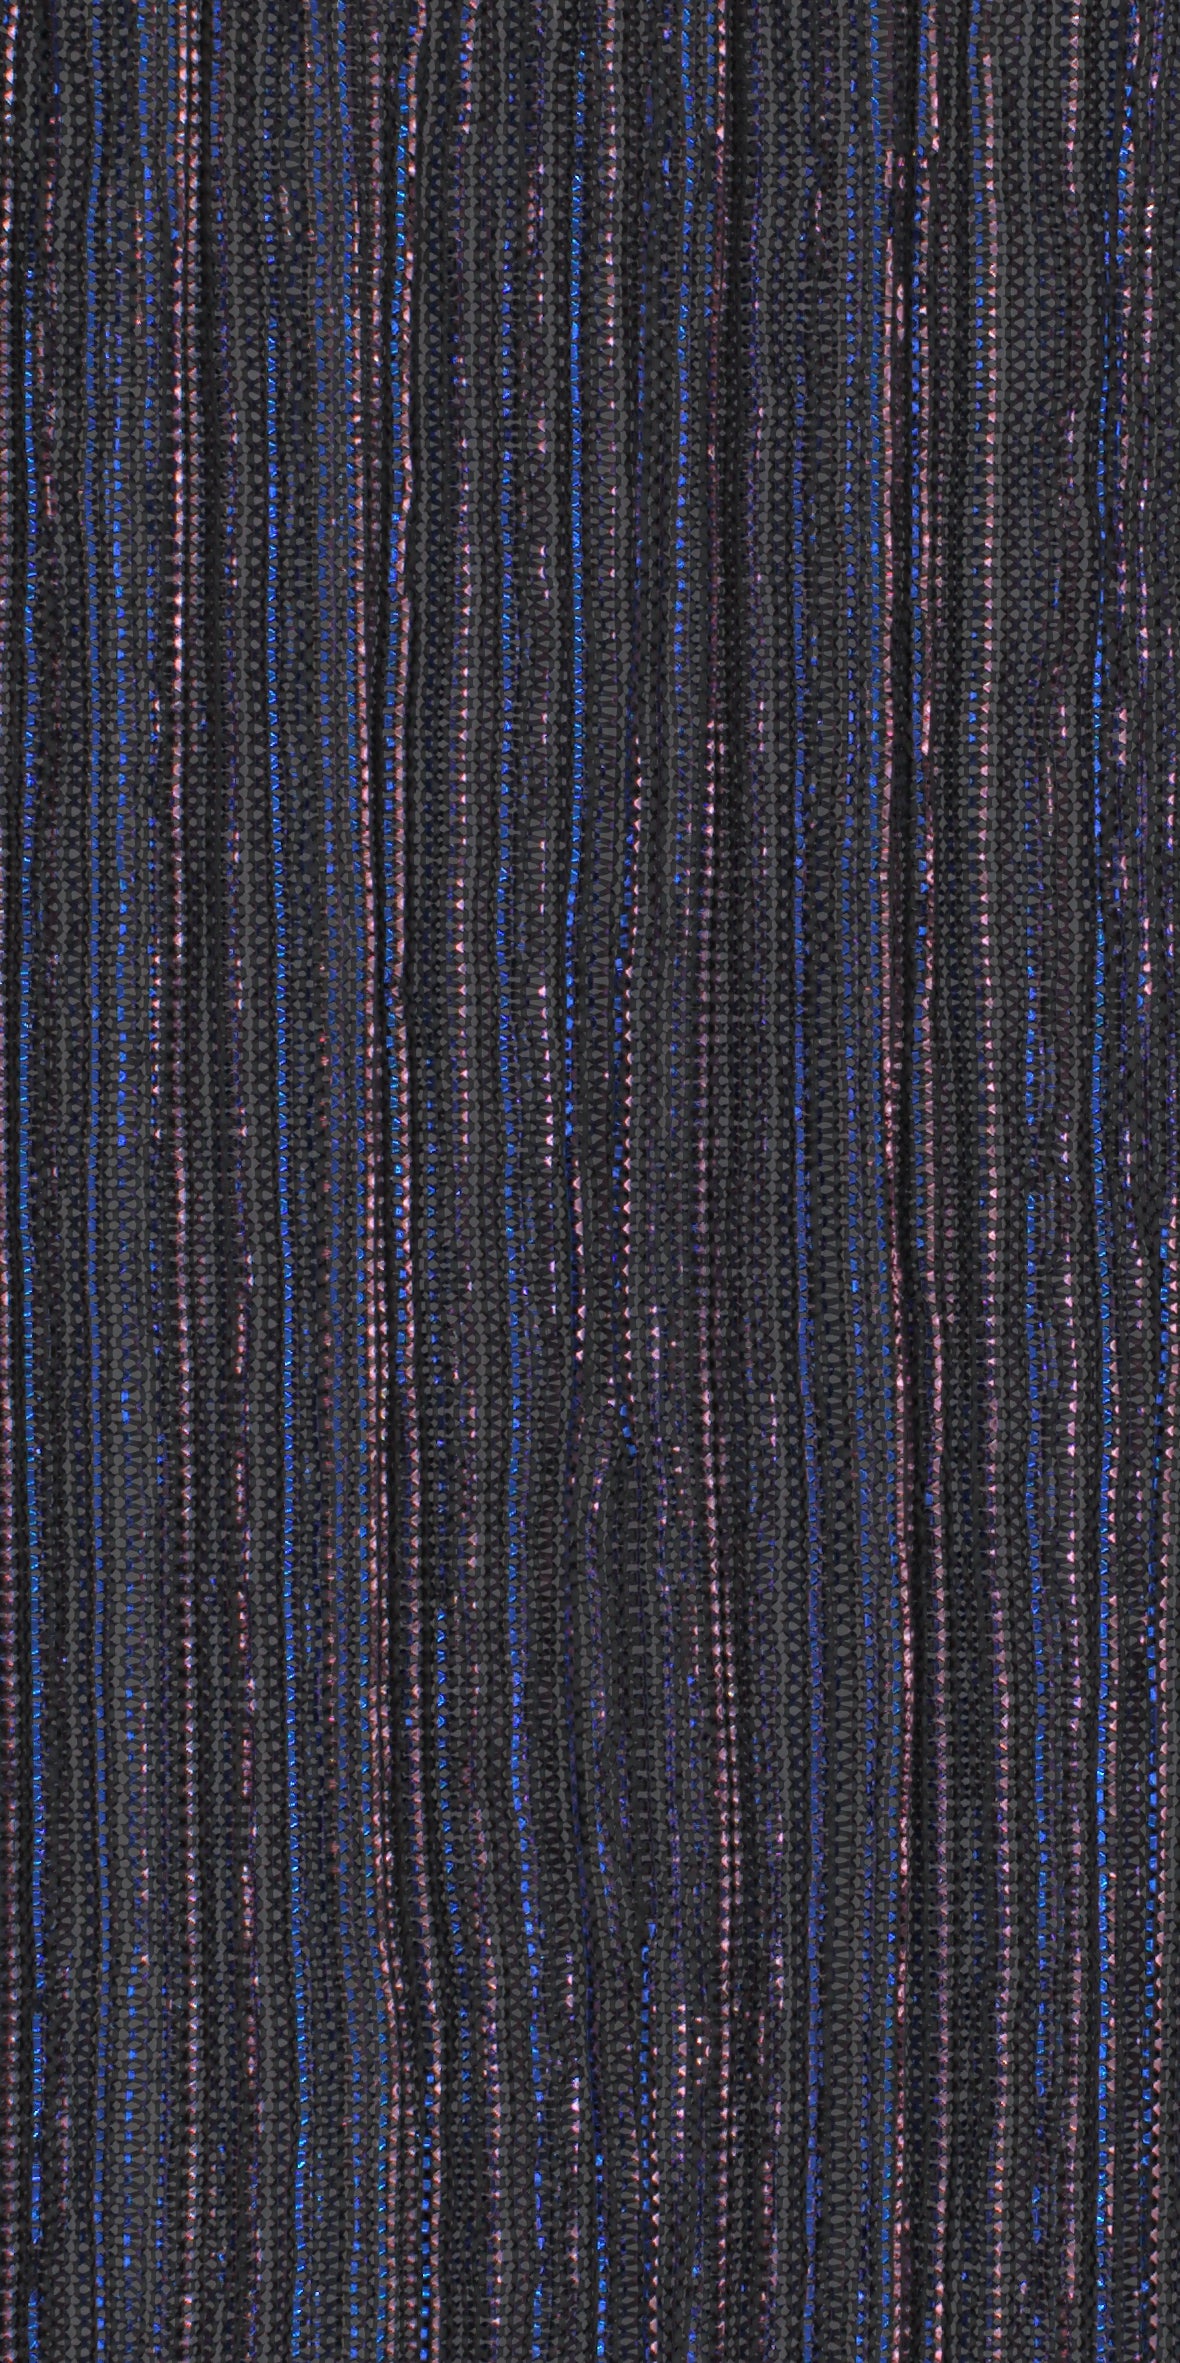 12006-04 Blue Violet Light Purple Metallic Pleat Plain Dyed Blend 126g/yd 56" blend knit metallic plain dyed pleat ppl new purple Metallic, Pleat - knit fabric - woven fabric - fabric company - fabric wholesale - fabric b2b - fabric factory - high quality fabric - hong kong fabric - fabric hk - acetate fabric - cotton fabric - linen fabric - metallic fabric - nylon fabric - polyester fabric - spandex fabric - chun wing hing - cwh hk - fabric worldwide ship - 針織布 - 梳織布 - 布料公司- 布料批發 - 香港布料 - 秦榮興